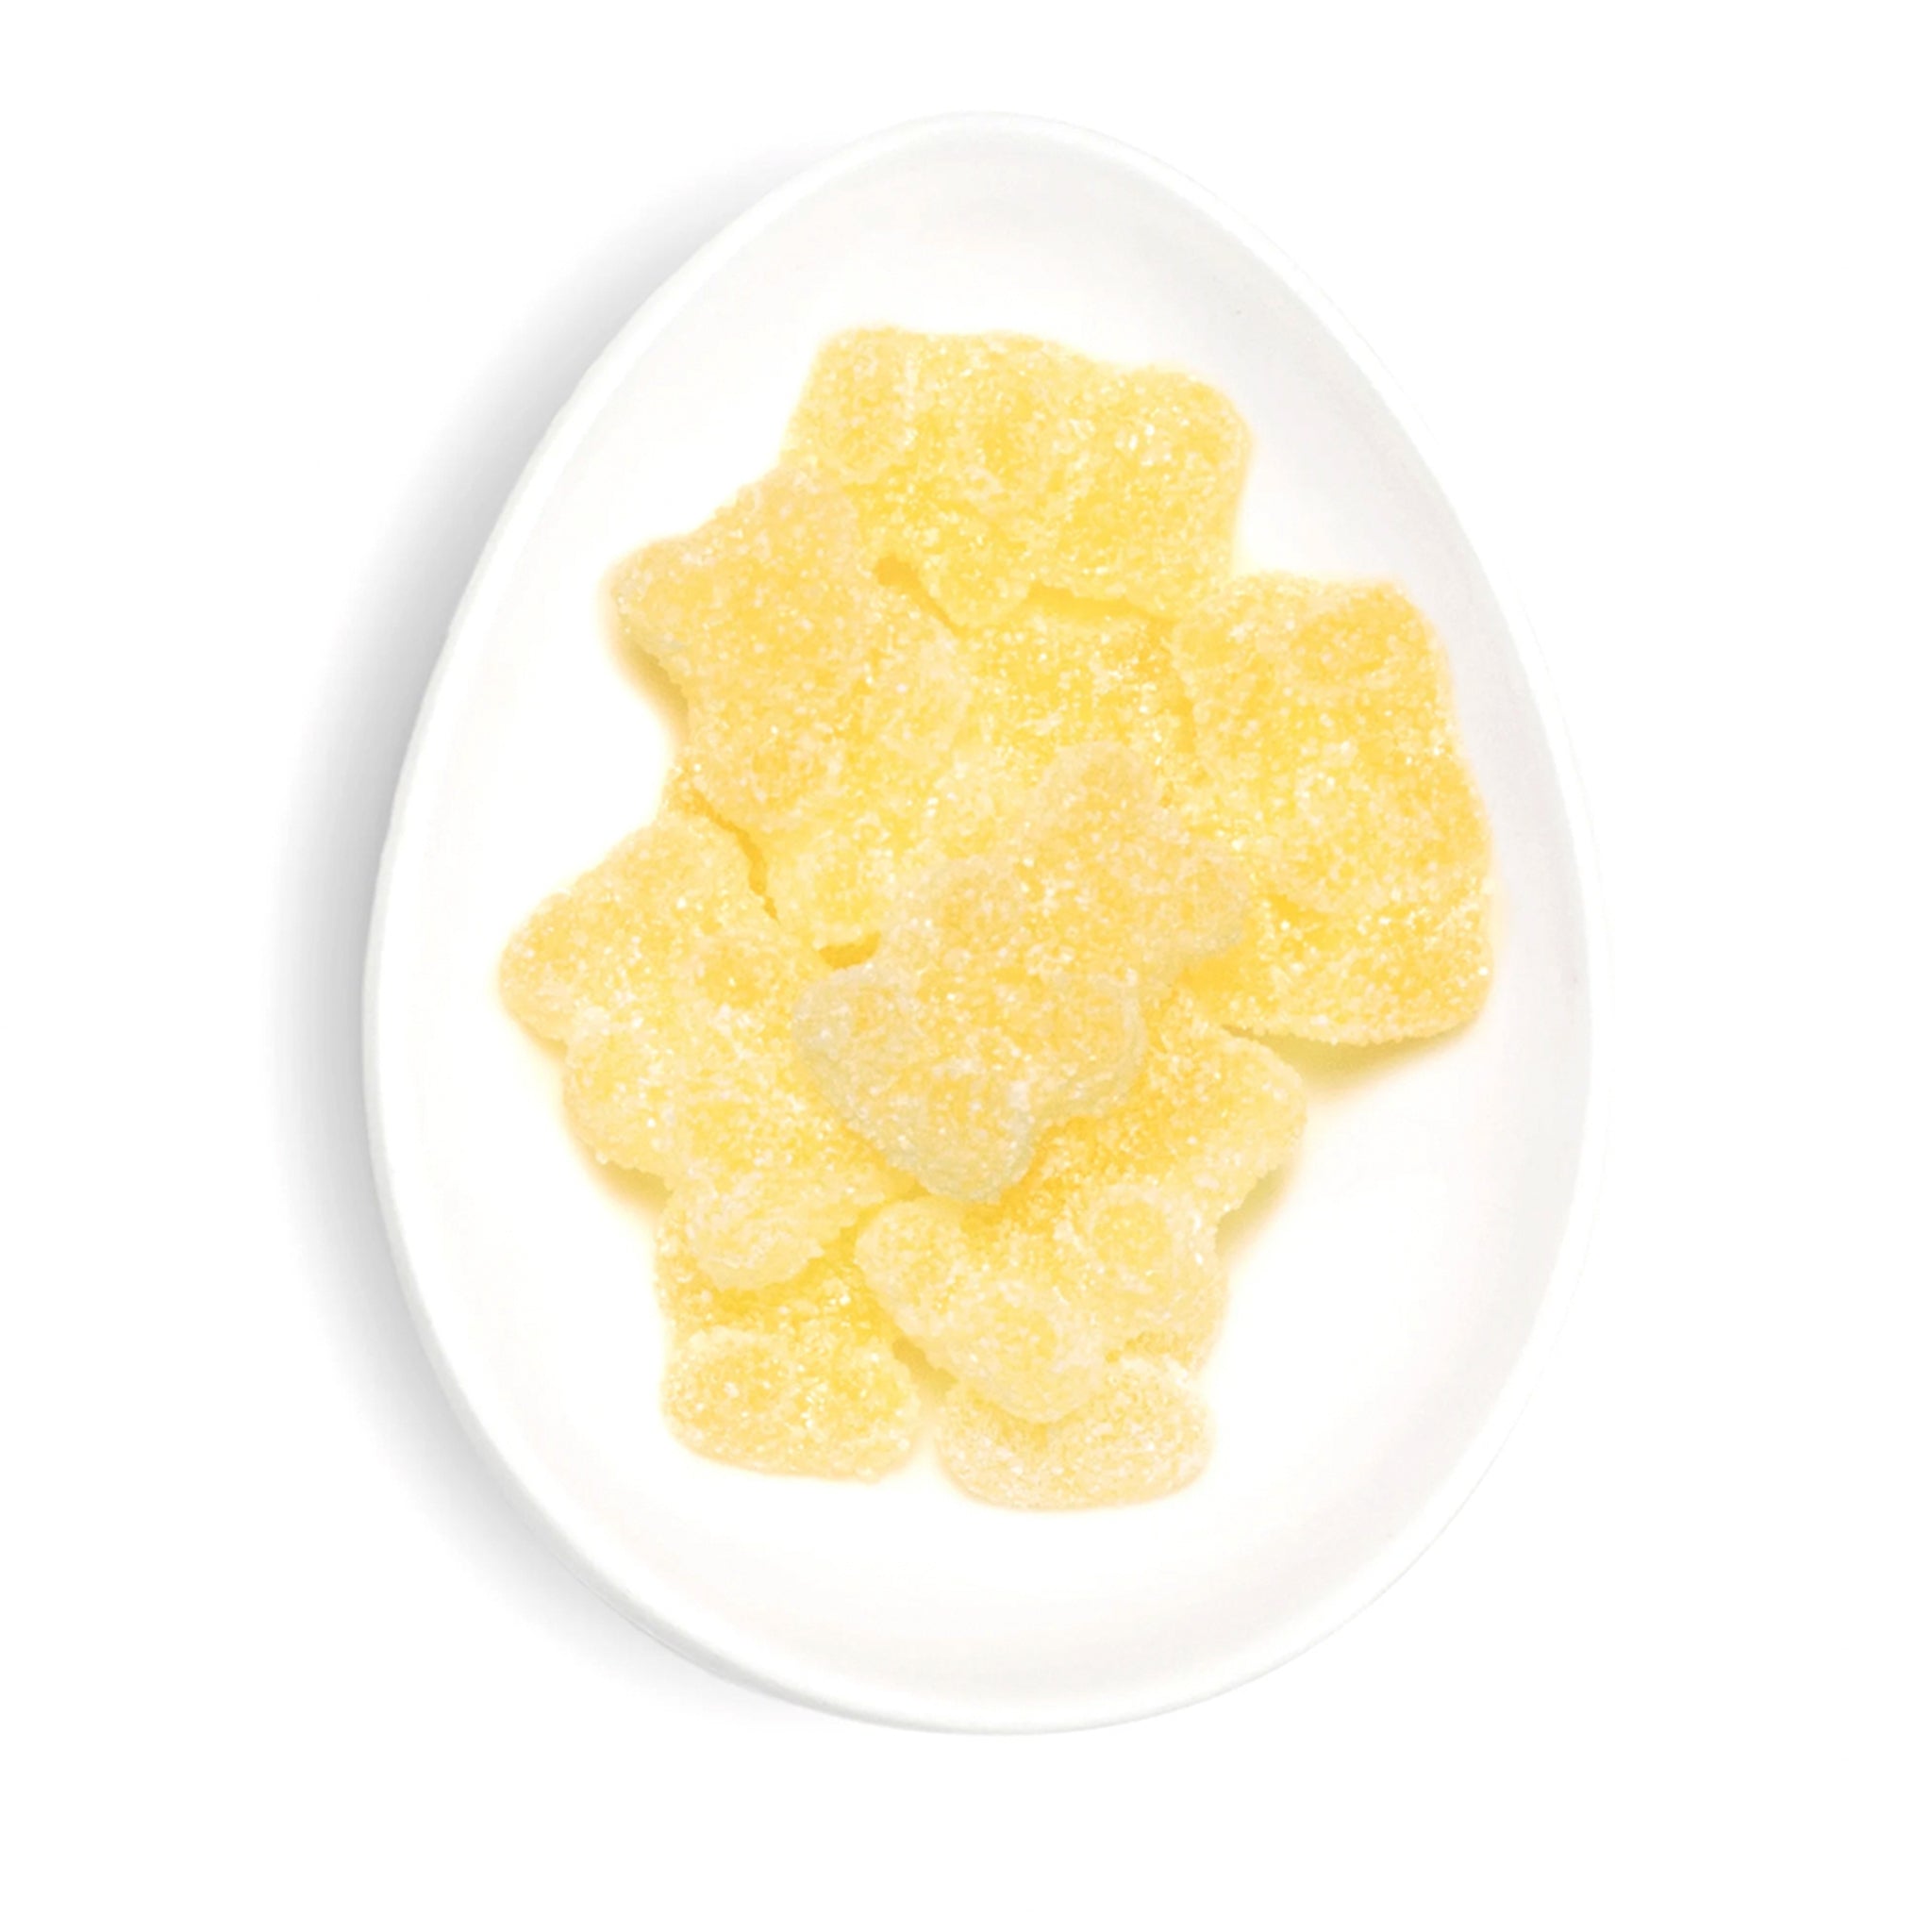 A plate of yellow lemon drop flavored gummy bears.